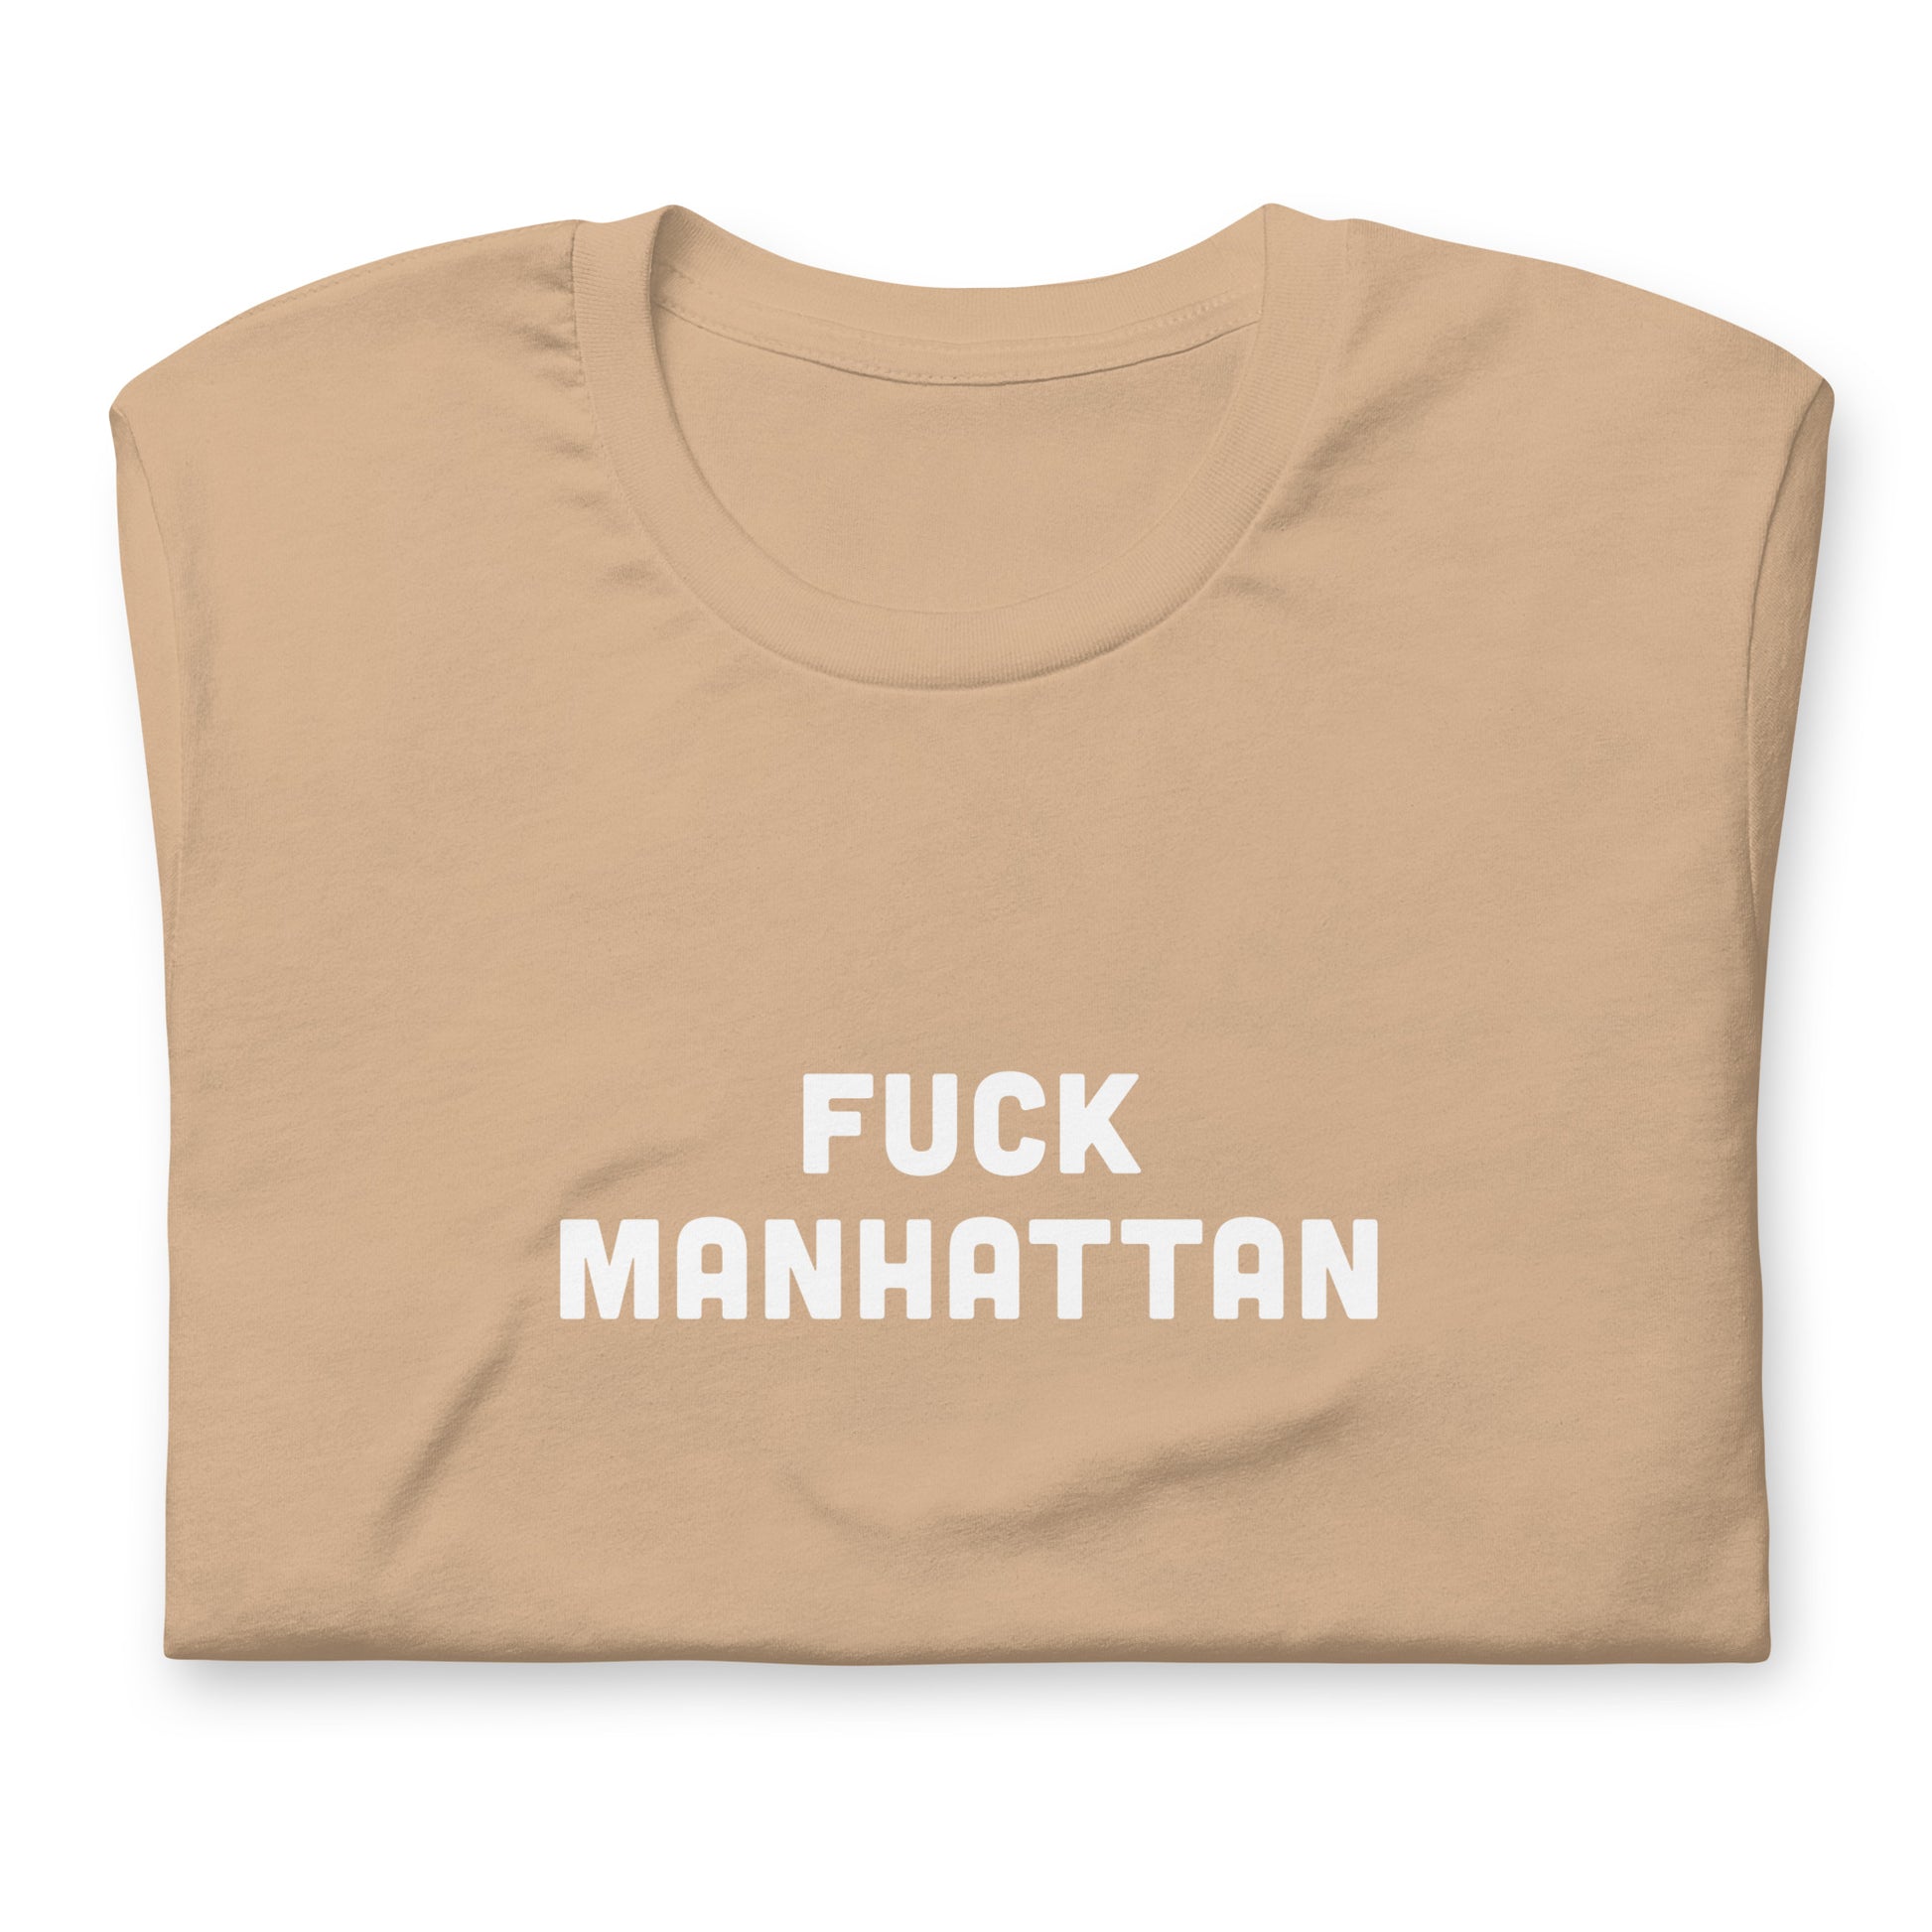 Fuck Manhattan T-Shirt Size 2XL Color Forest